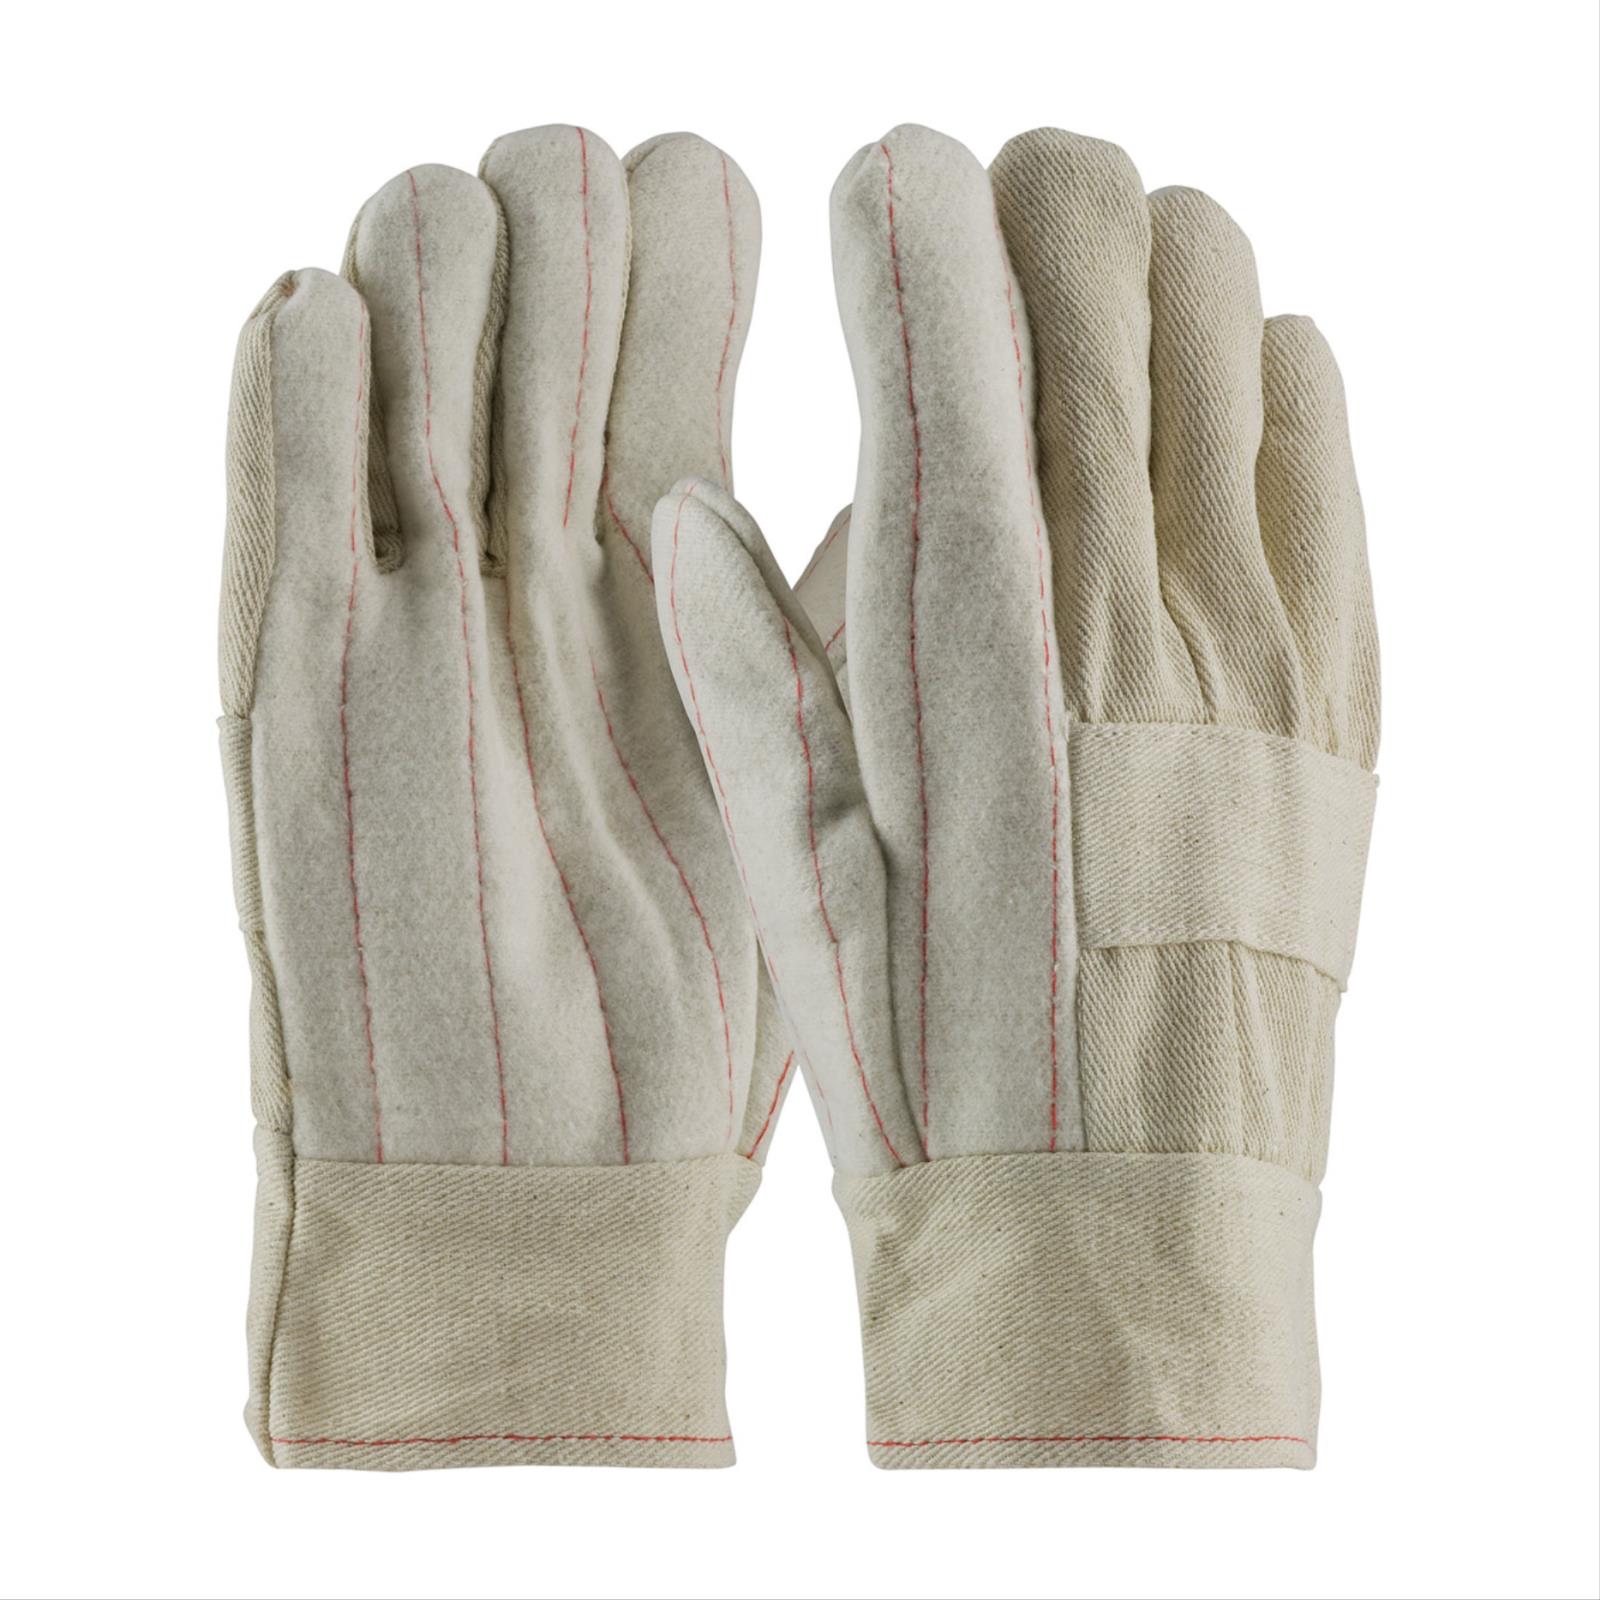 Premium Grade Hot Mill Glove, Burlap, Band Top, 32 oz